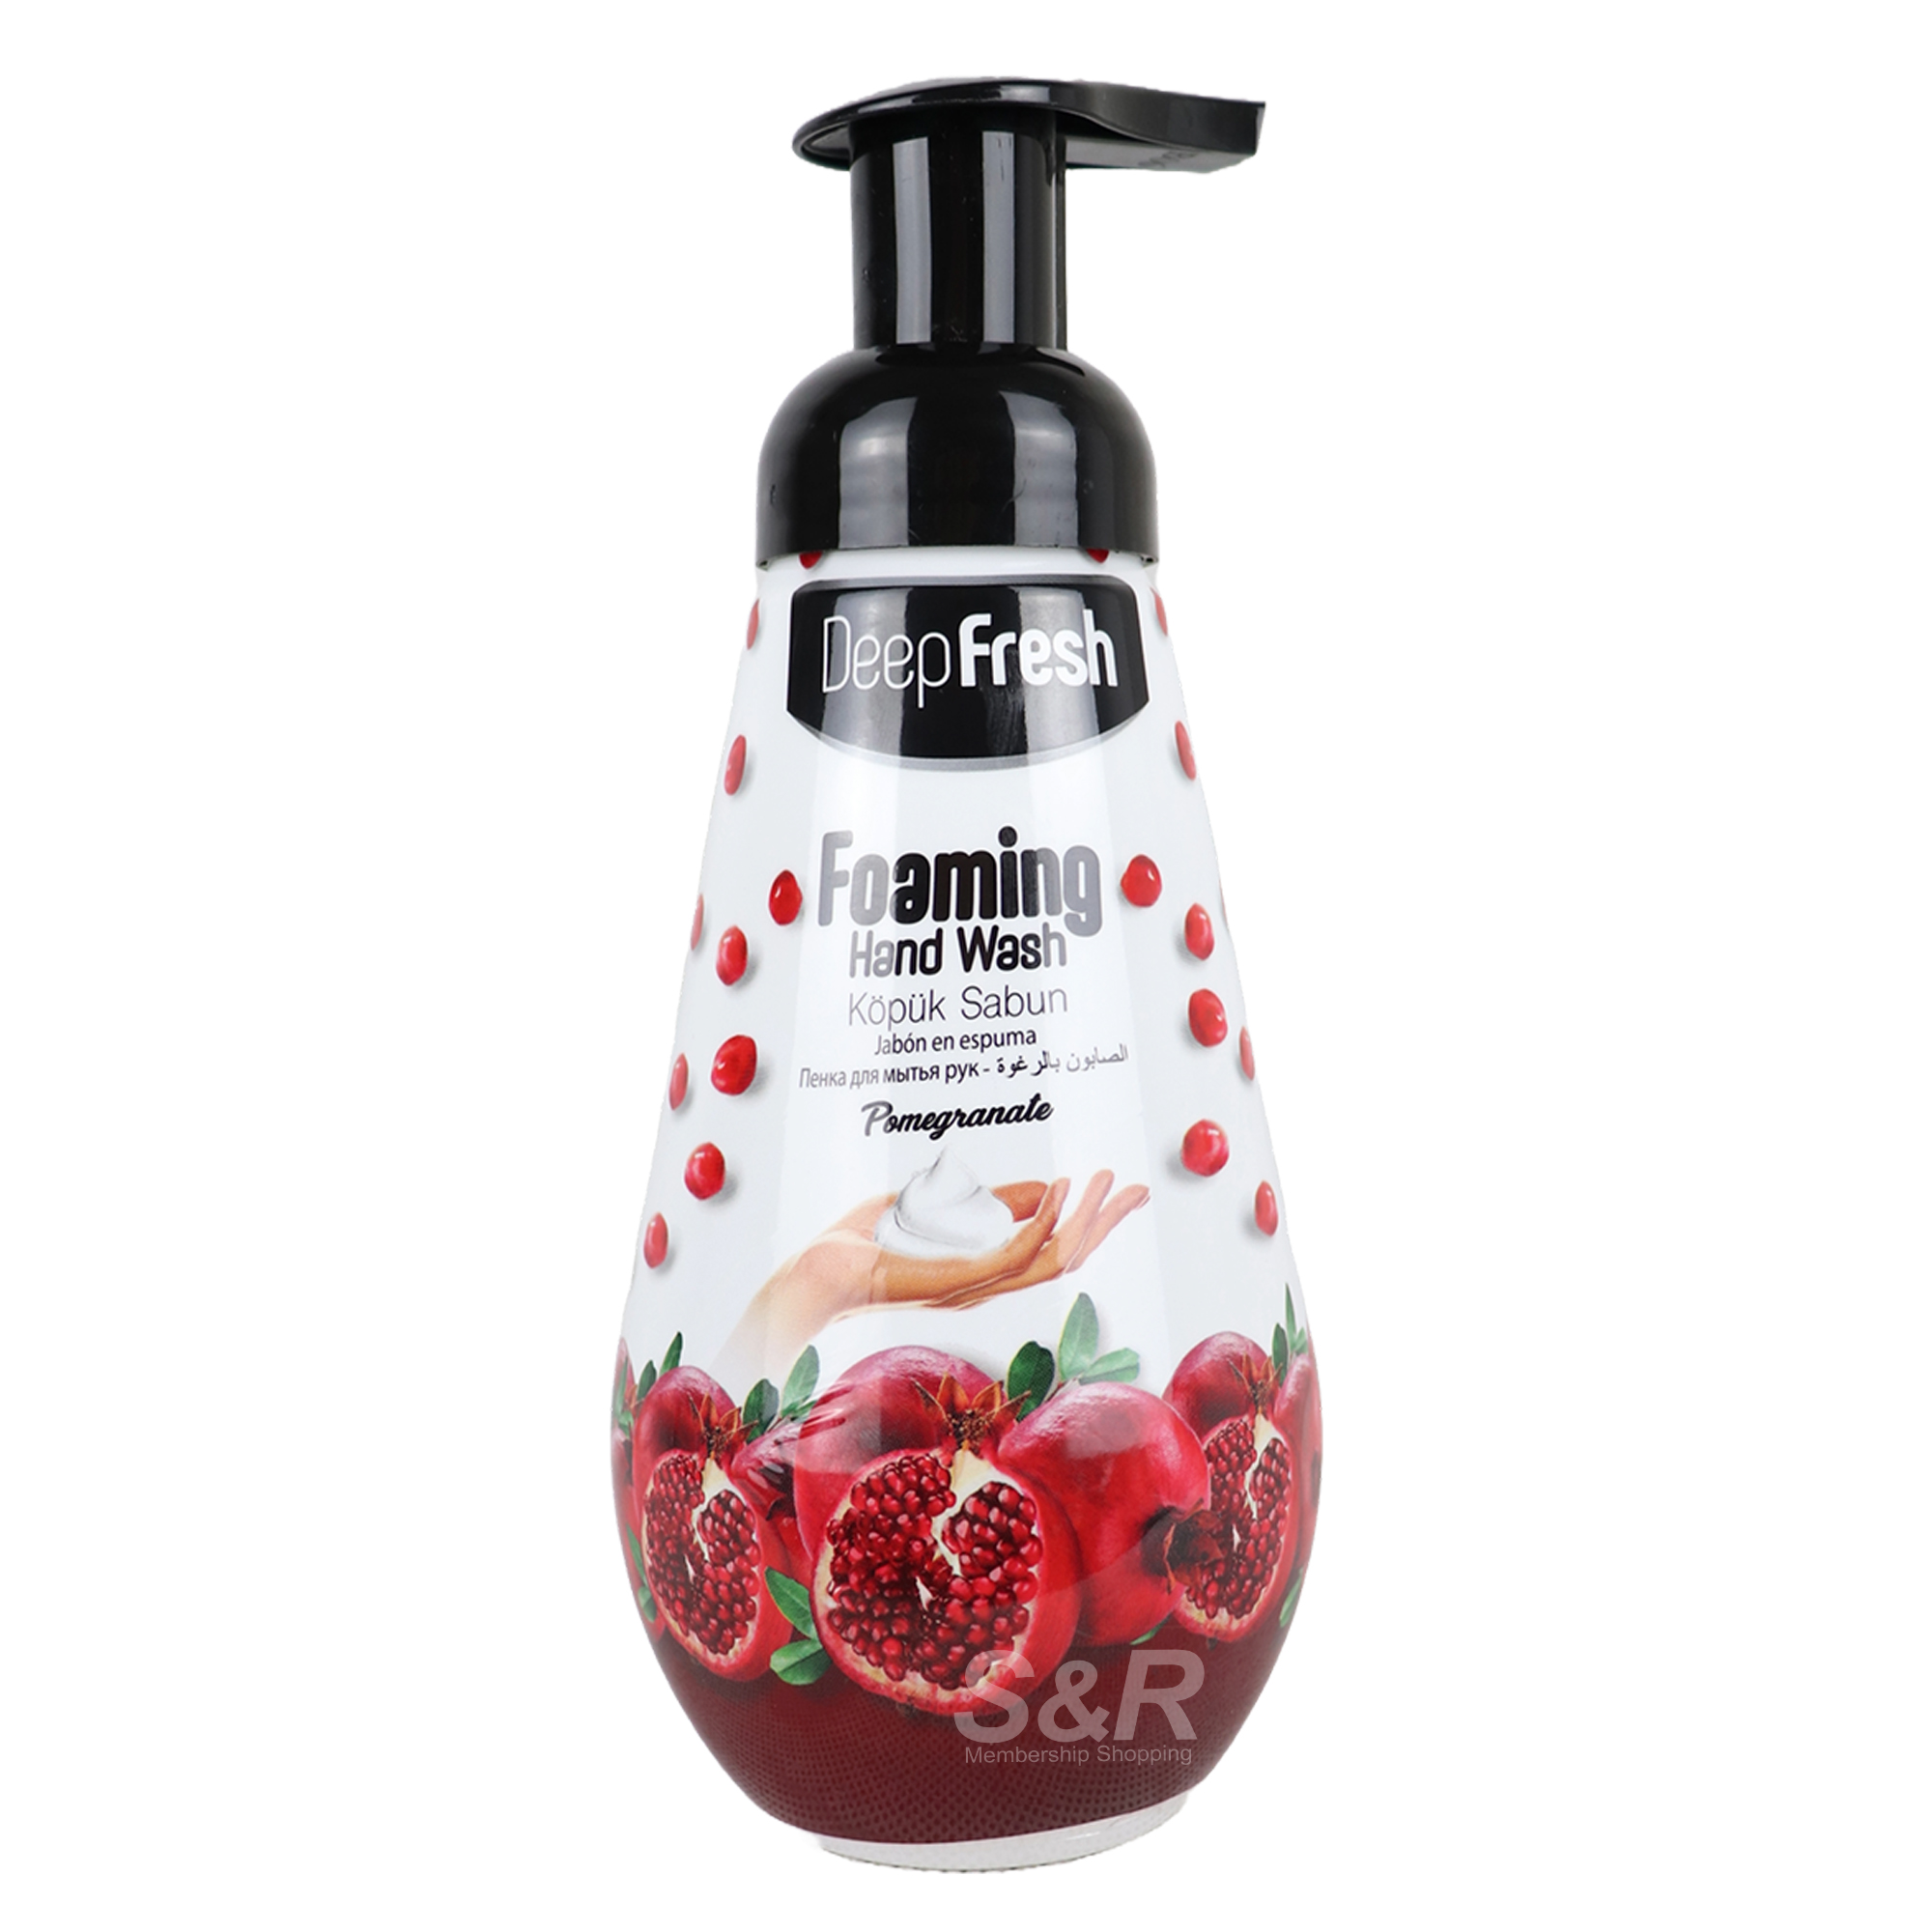 Deep Fresh Foaming Hand Wash Pomegranate 400mL